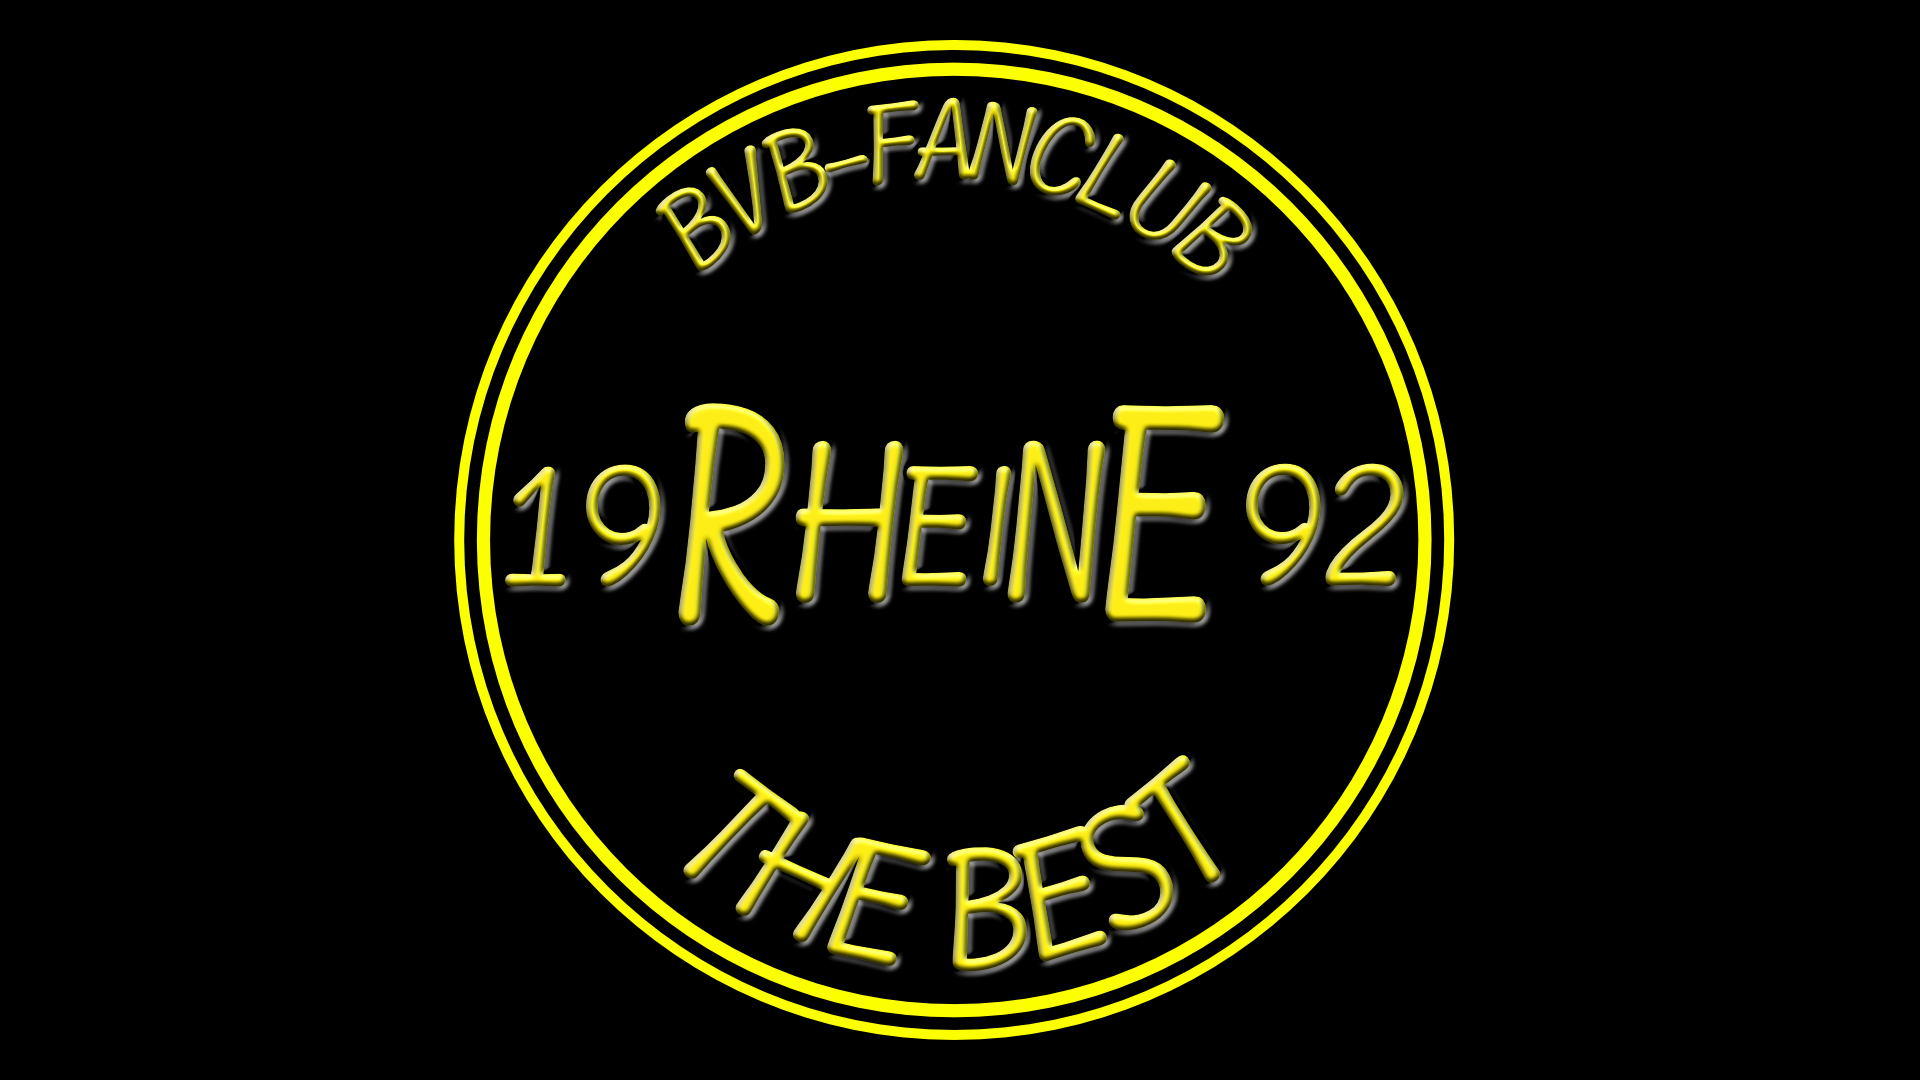 (c) Bvbfanclub-rheine.de